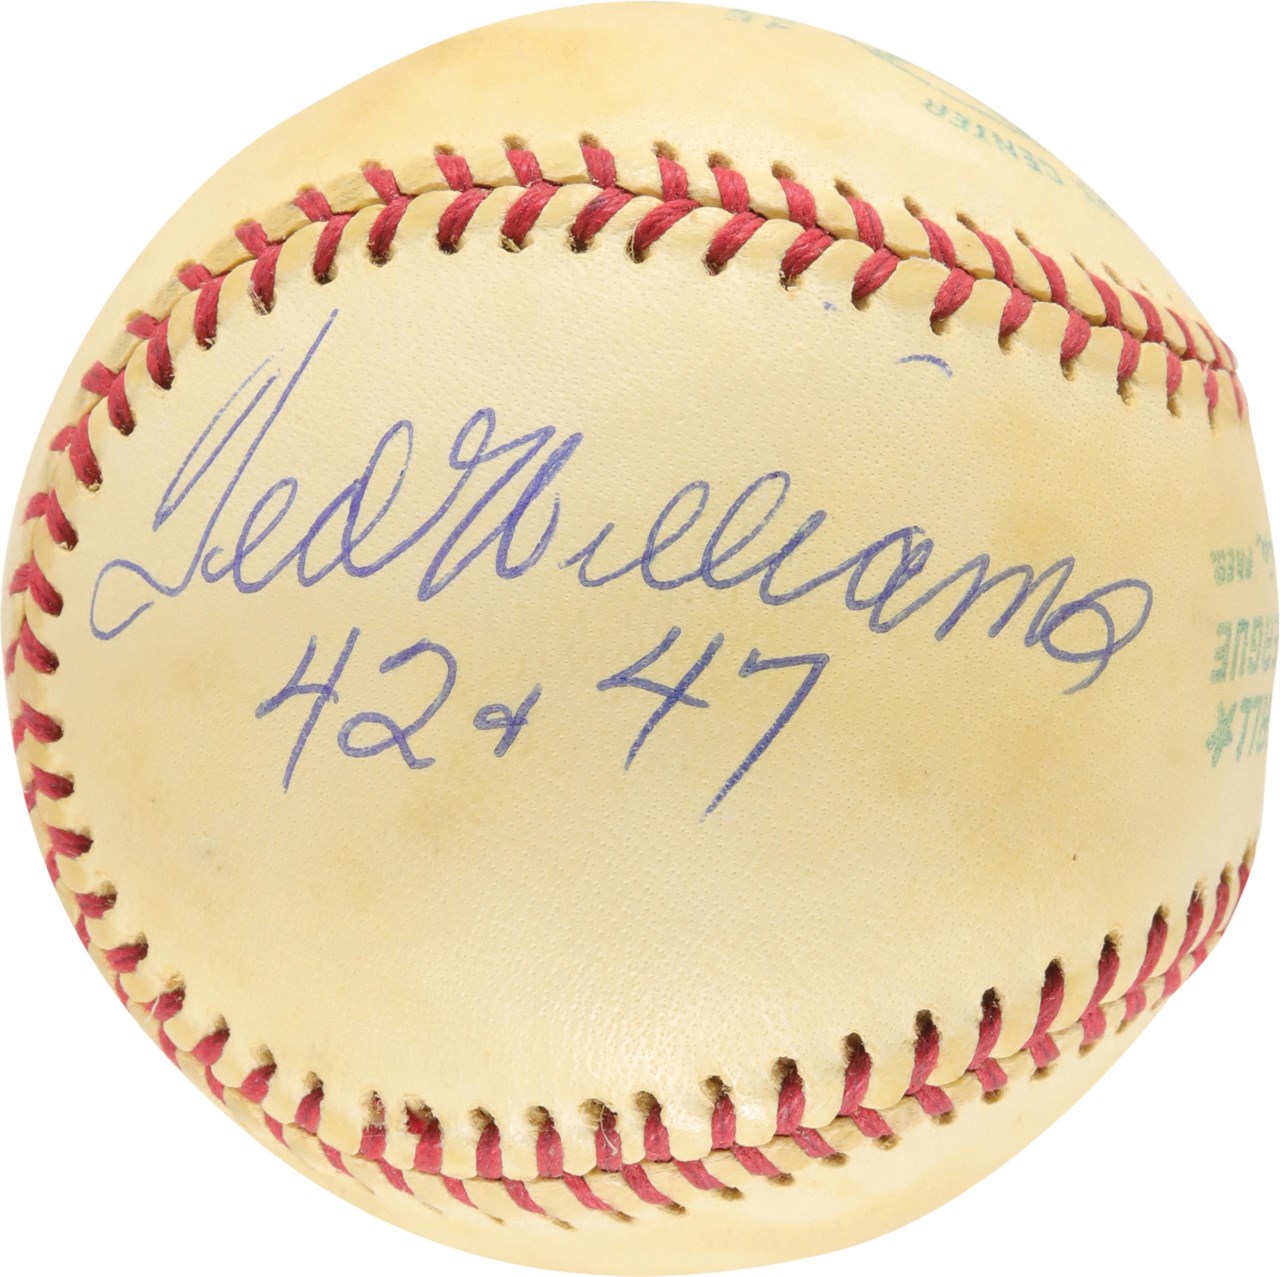 - Ted Williams Triple Crown "42 & 47" Single Signed Baseball (JSA)